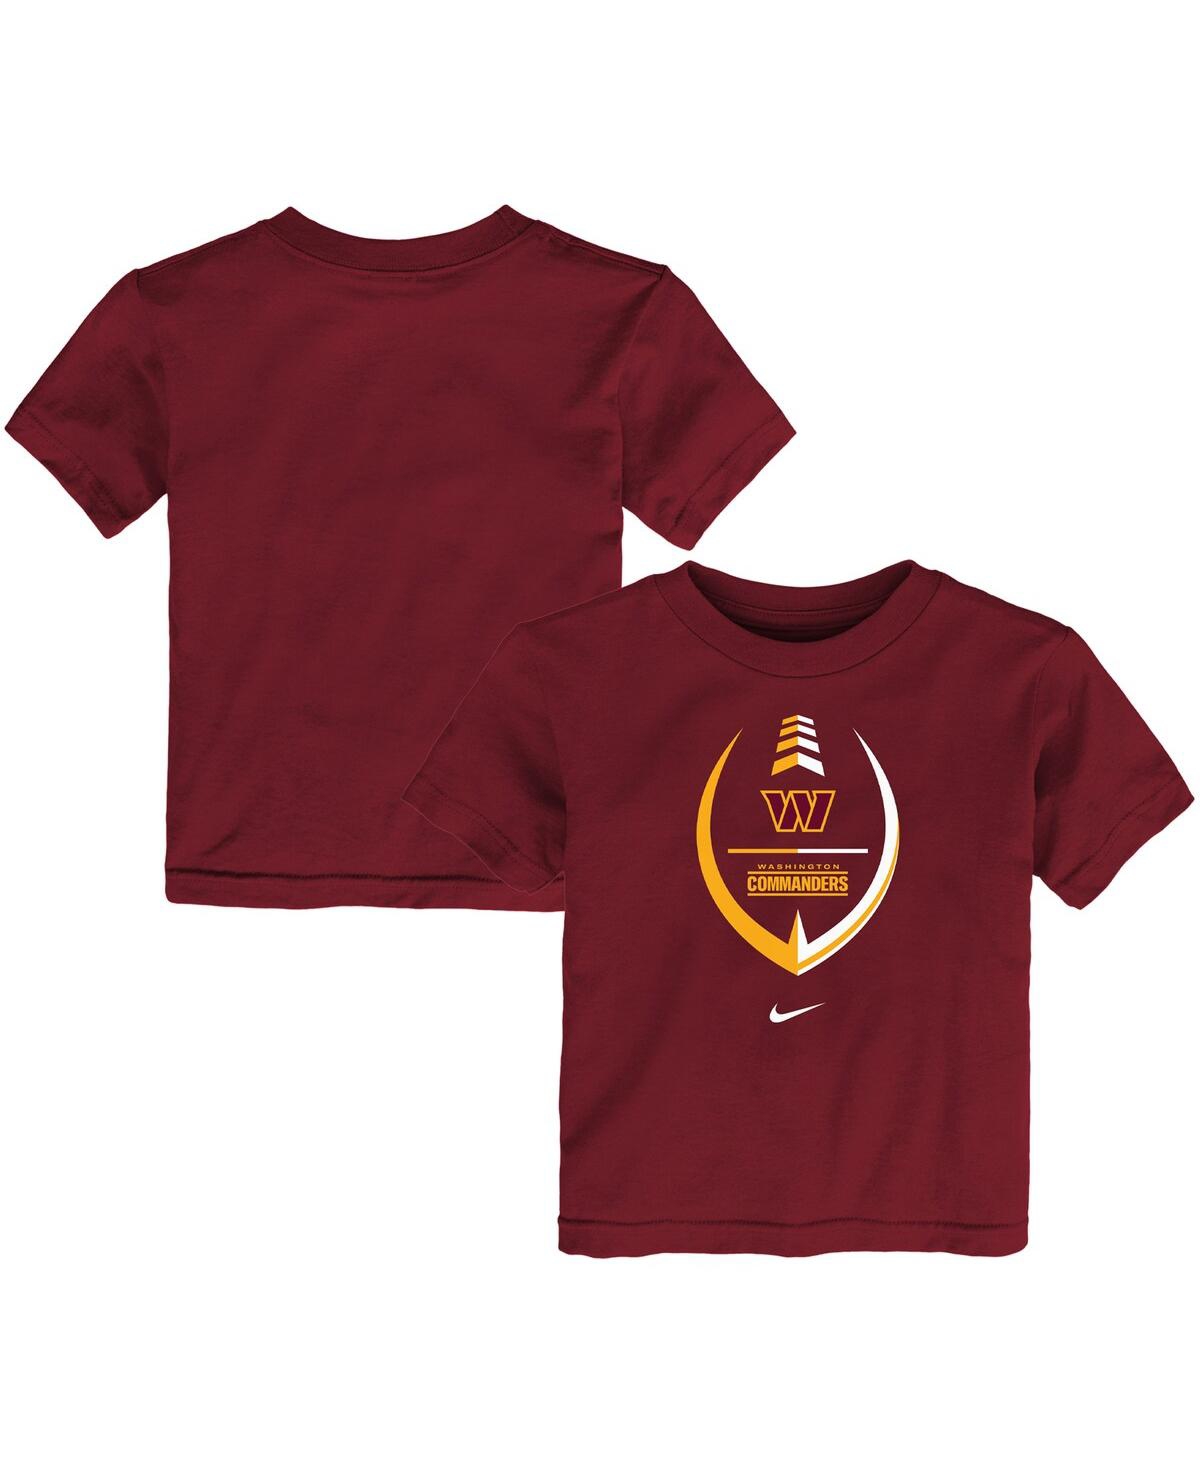 Shop Nike Toddler Boys And Girls  Burgundy Washington Commanders Football Wordmark T-shirt